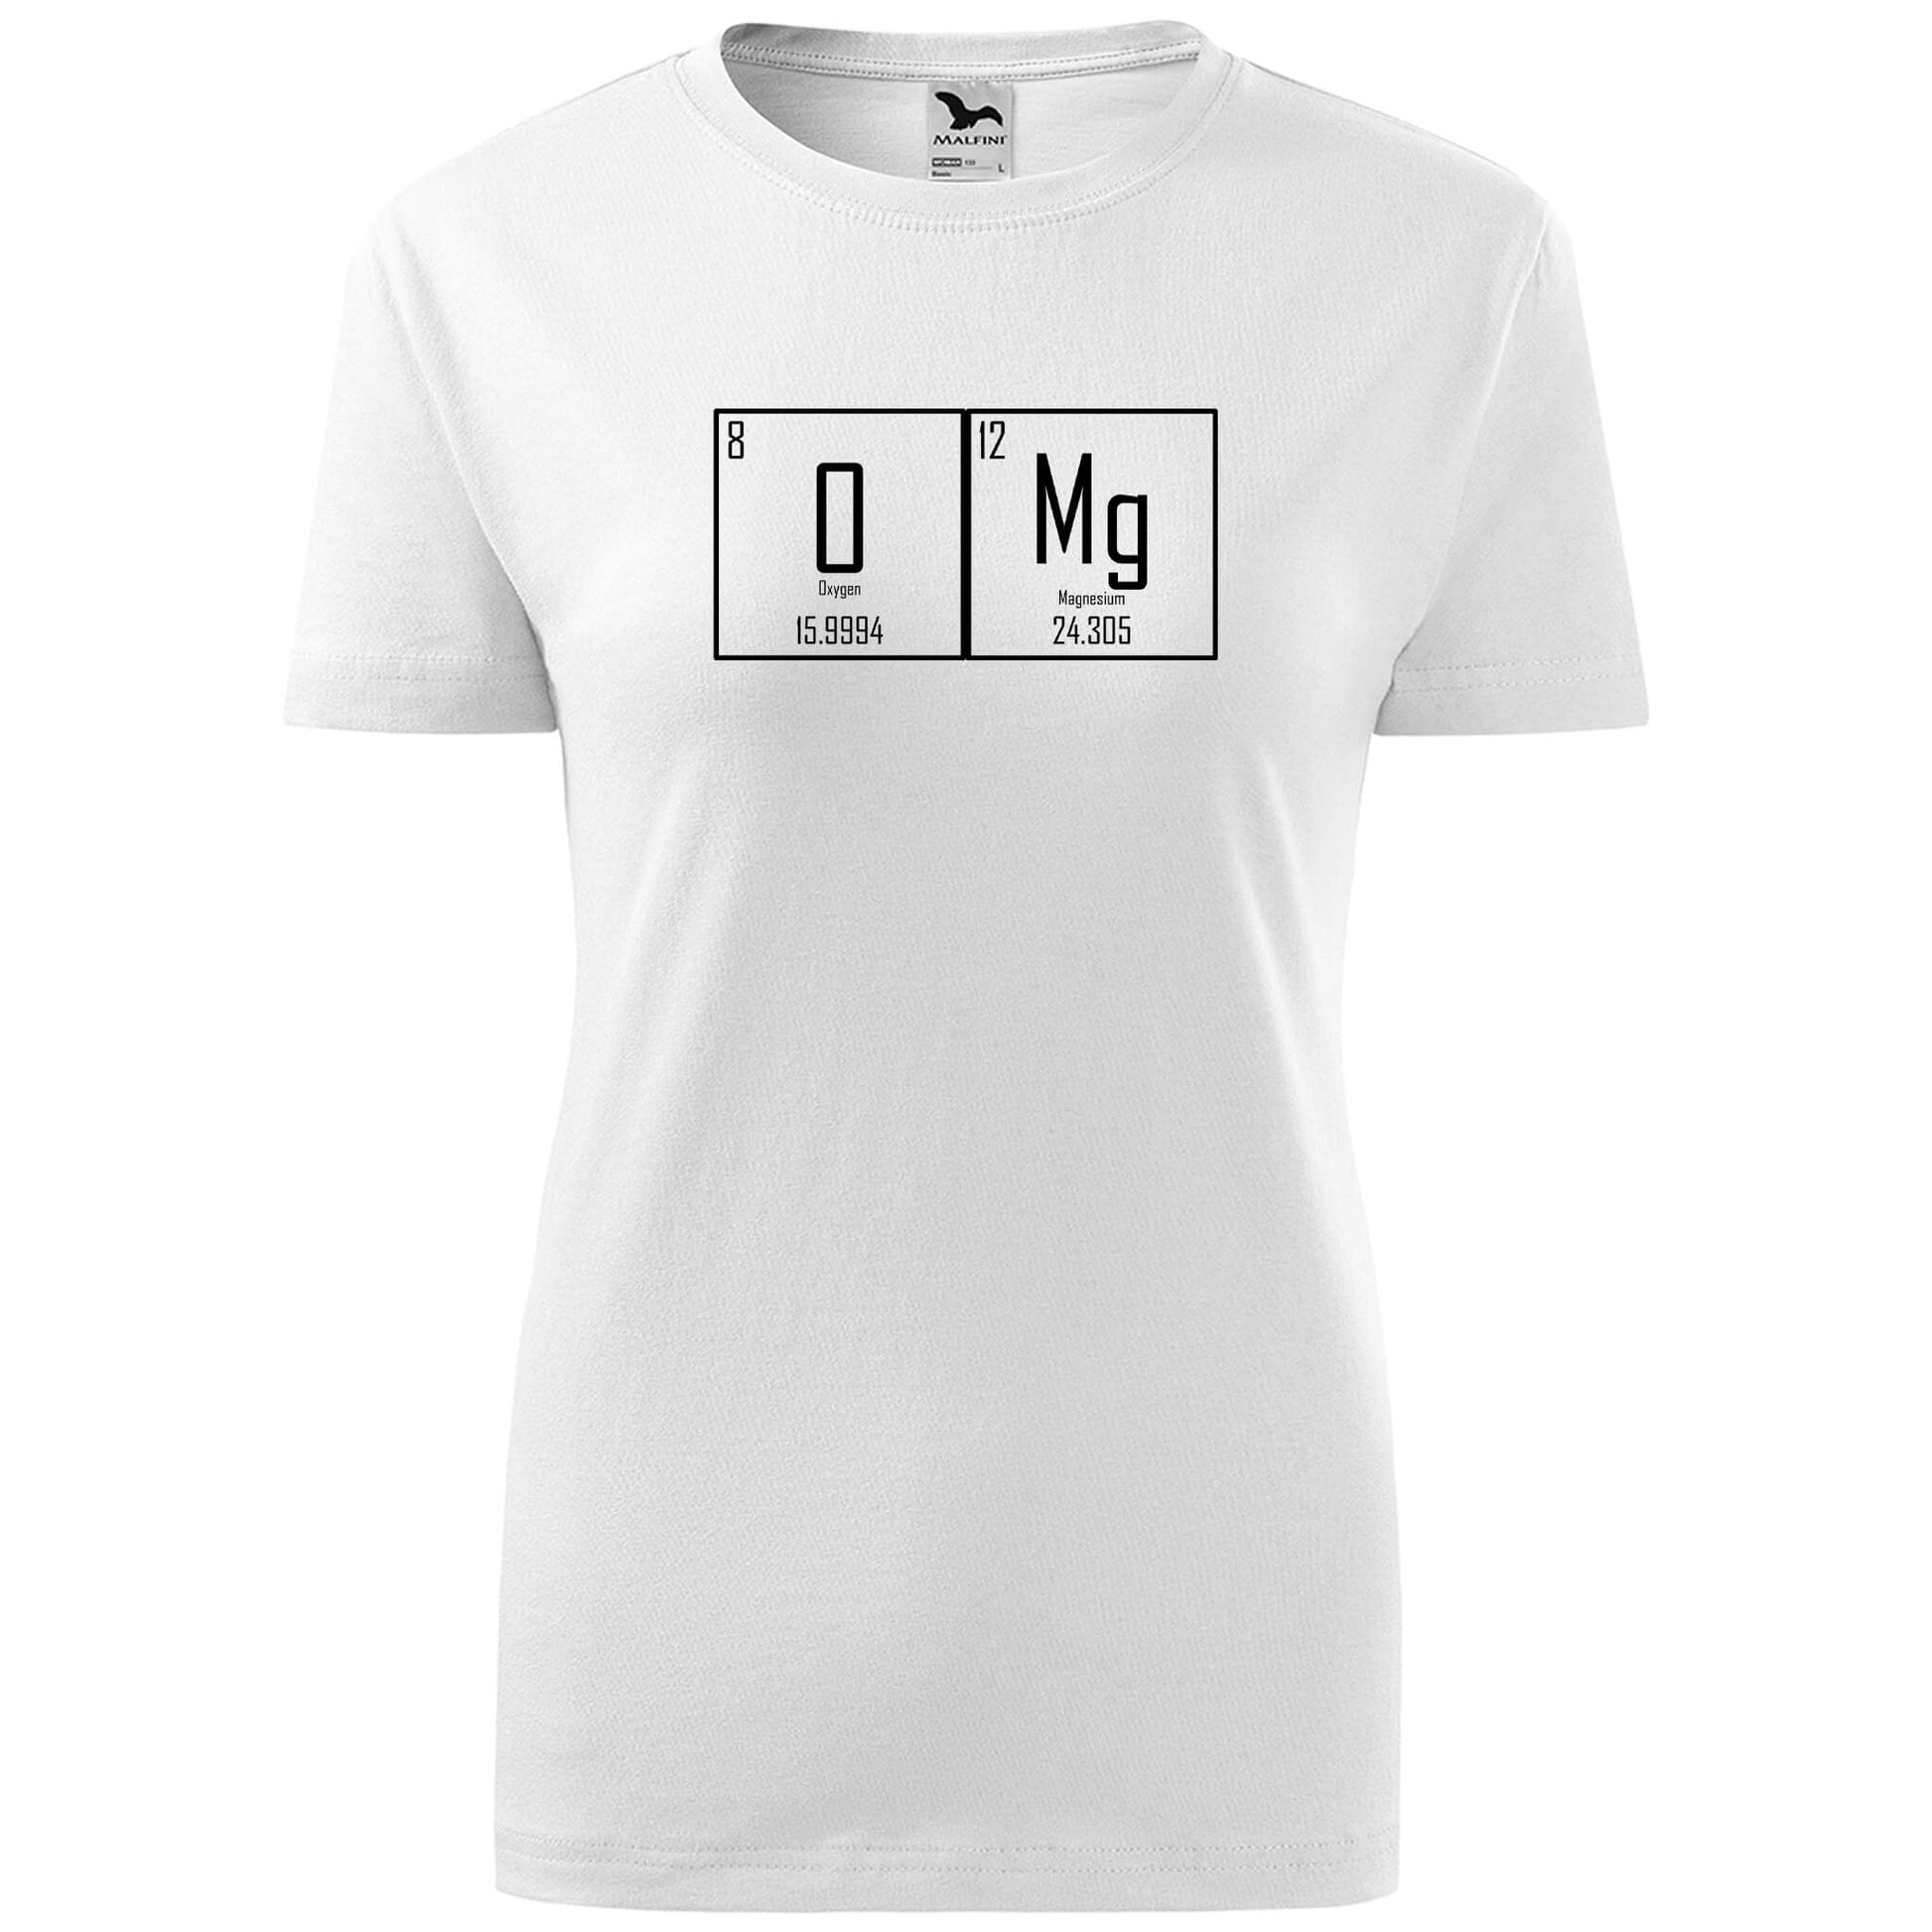 T-shirt - OMg - rvdesignprint